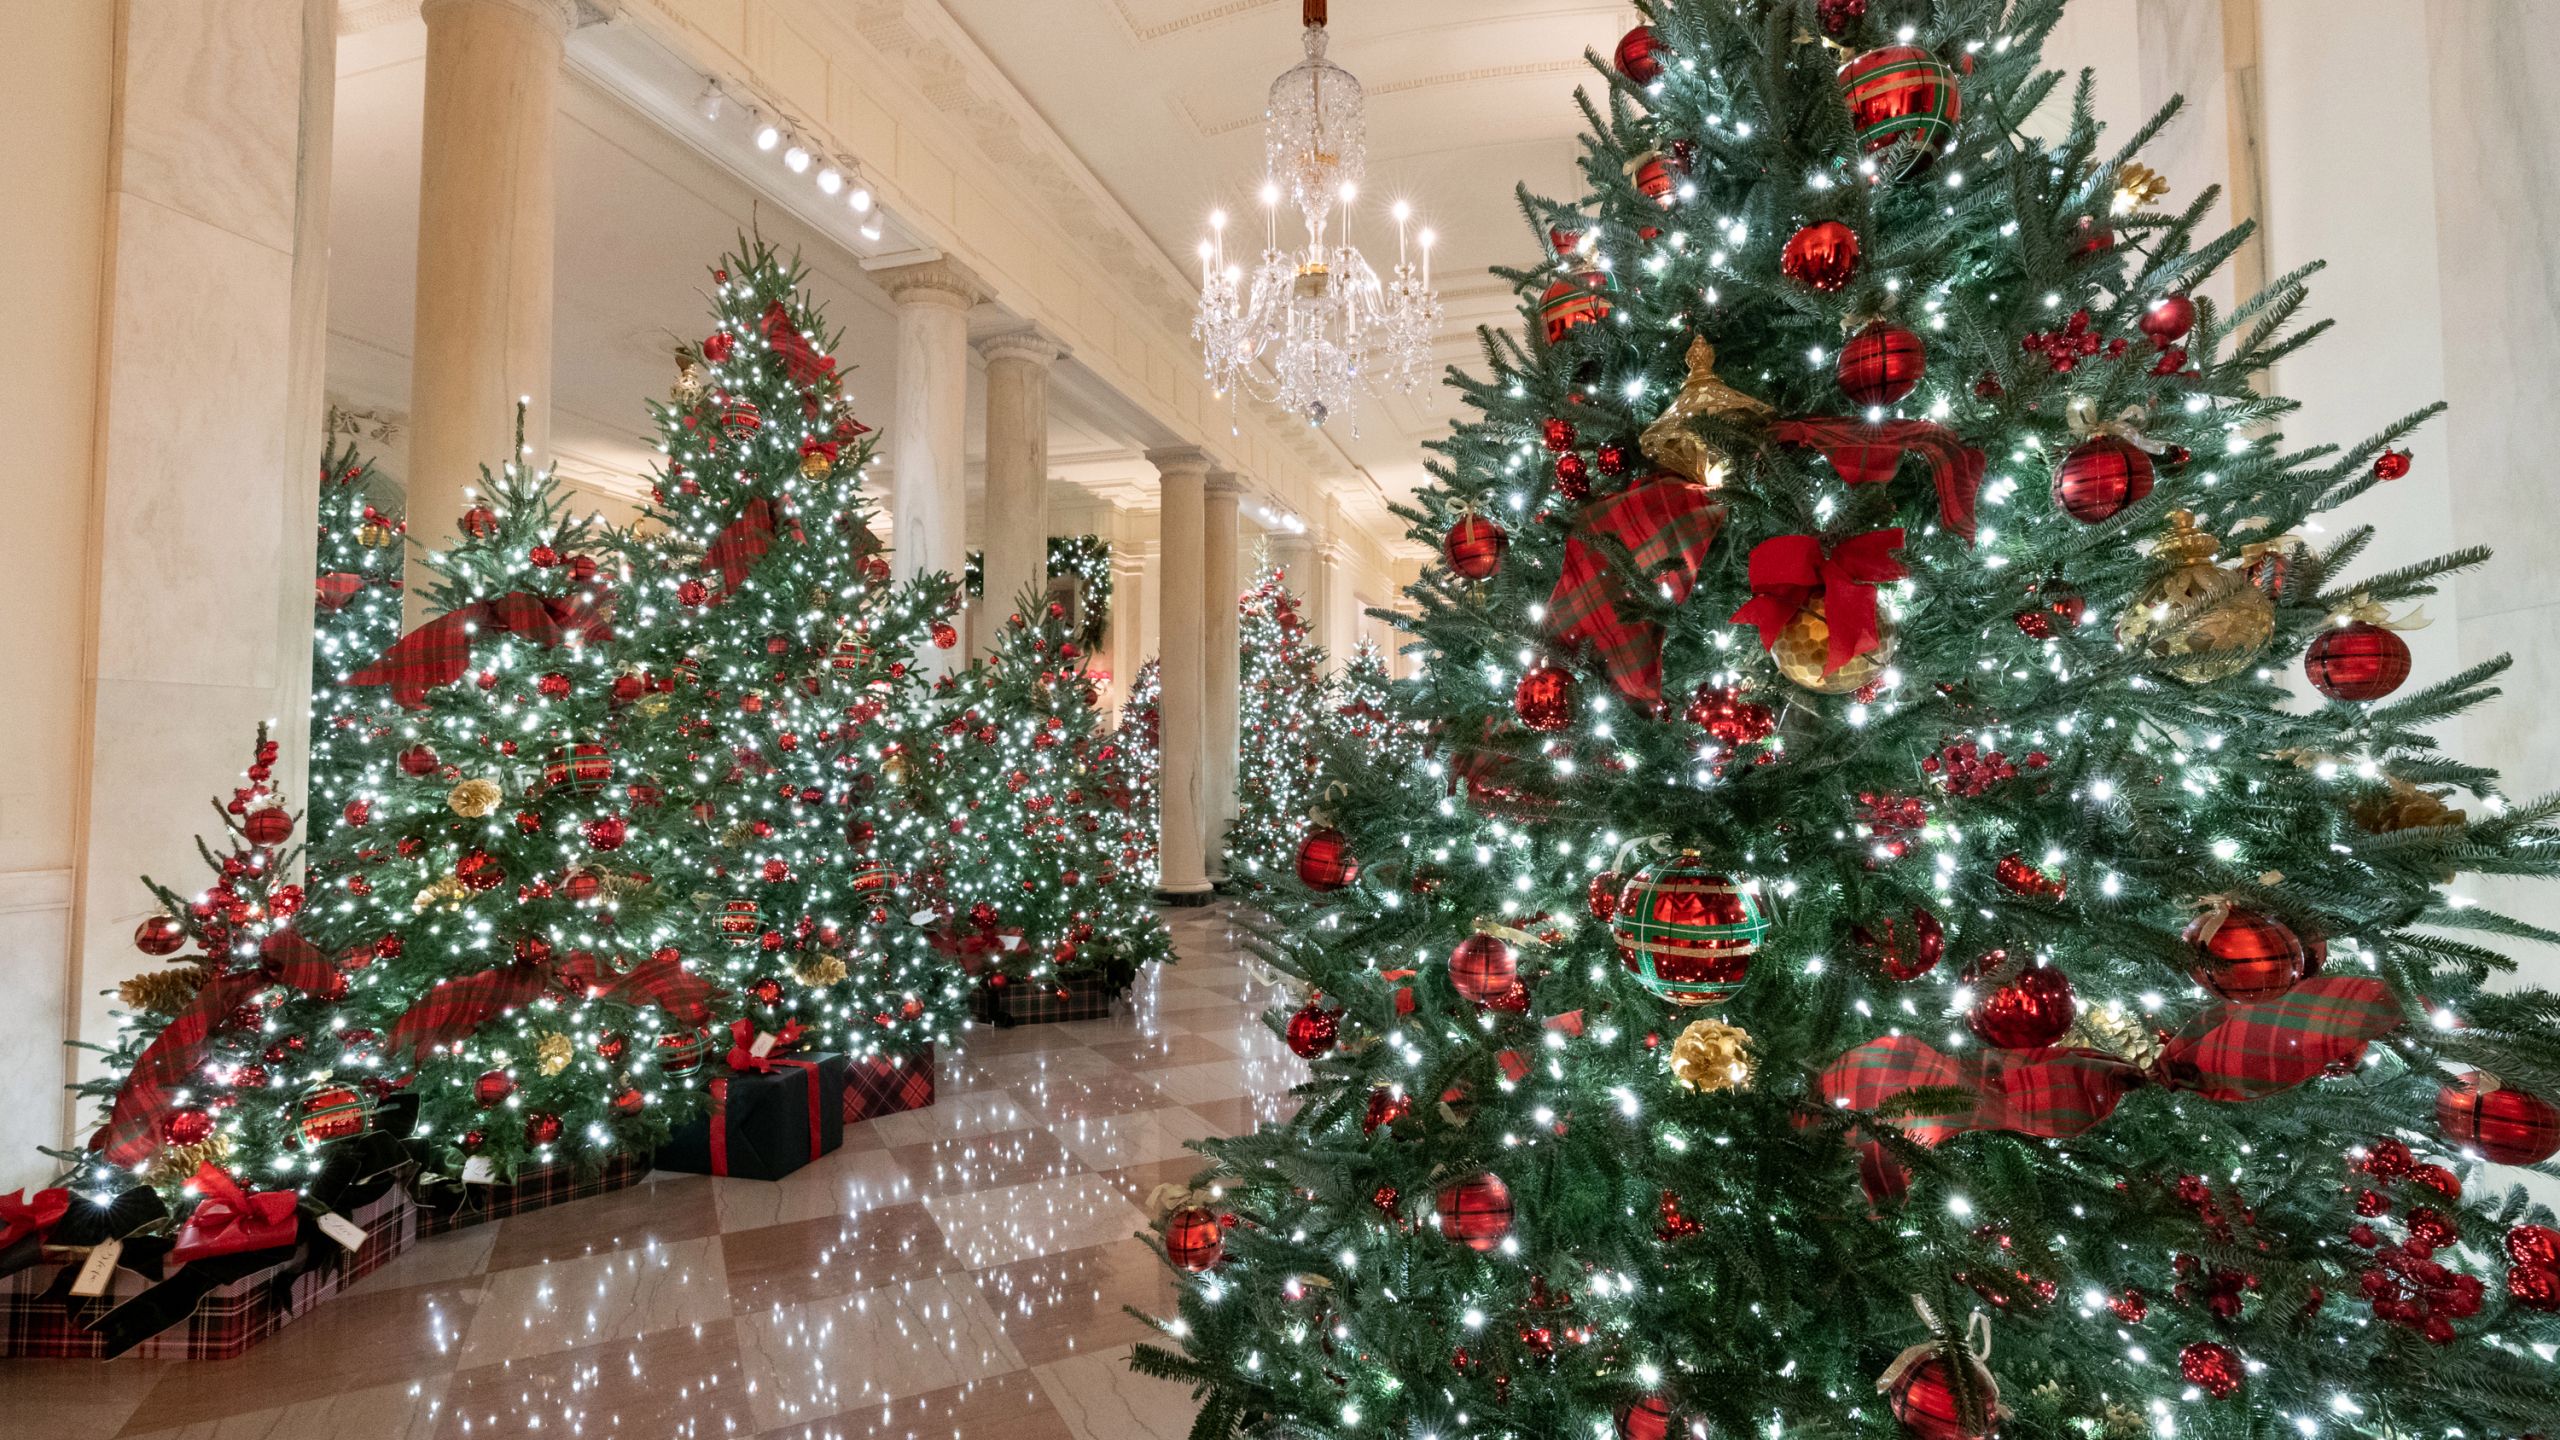 Photos show First Lady Melania Trump's 2020 White House Christmas decor